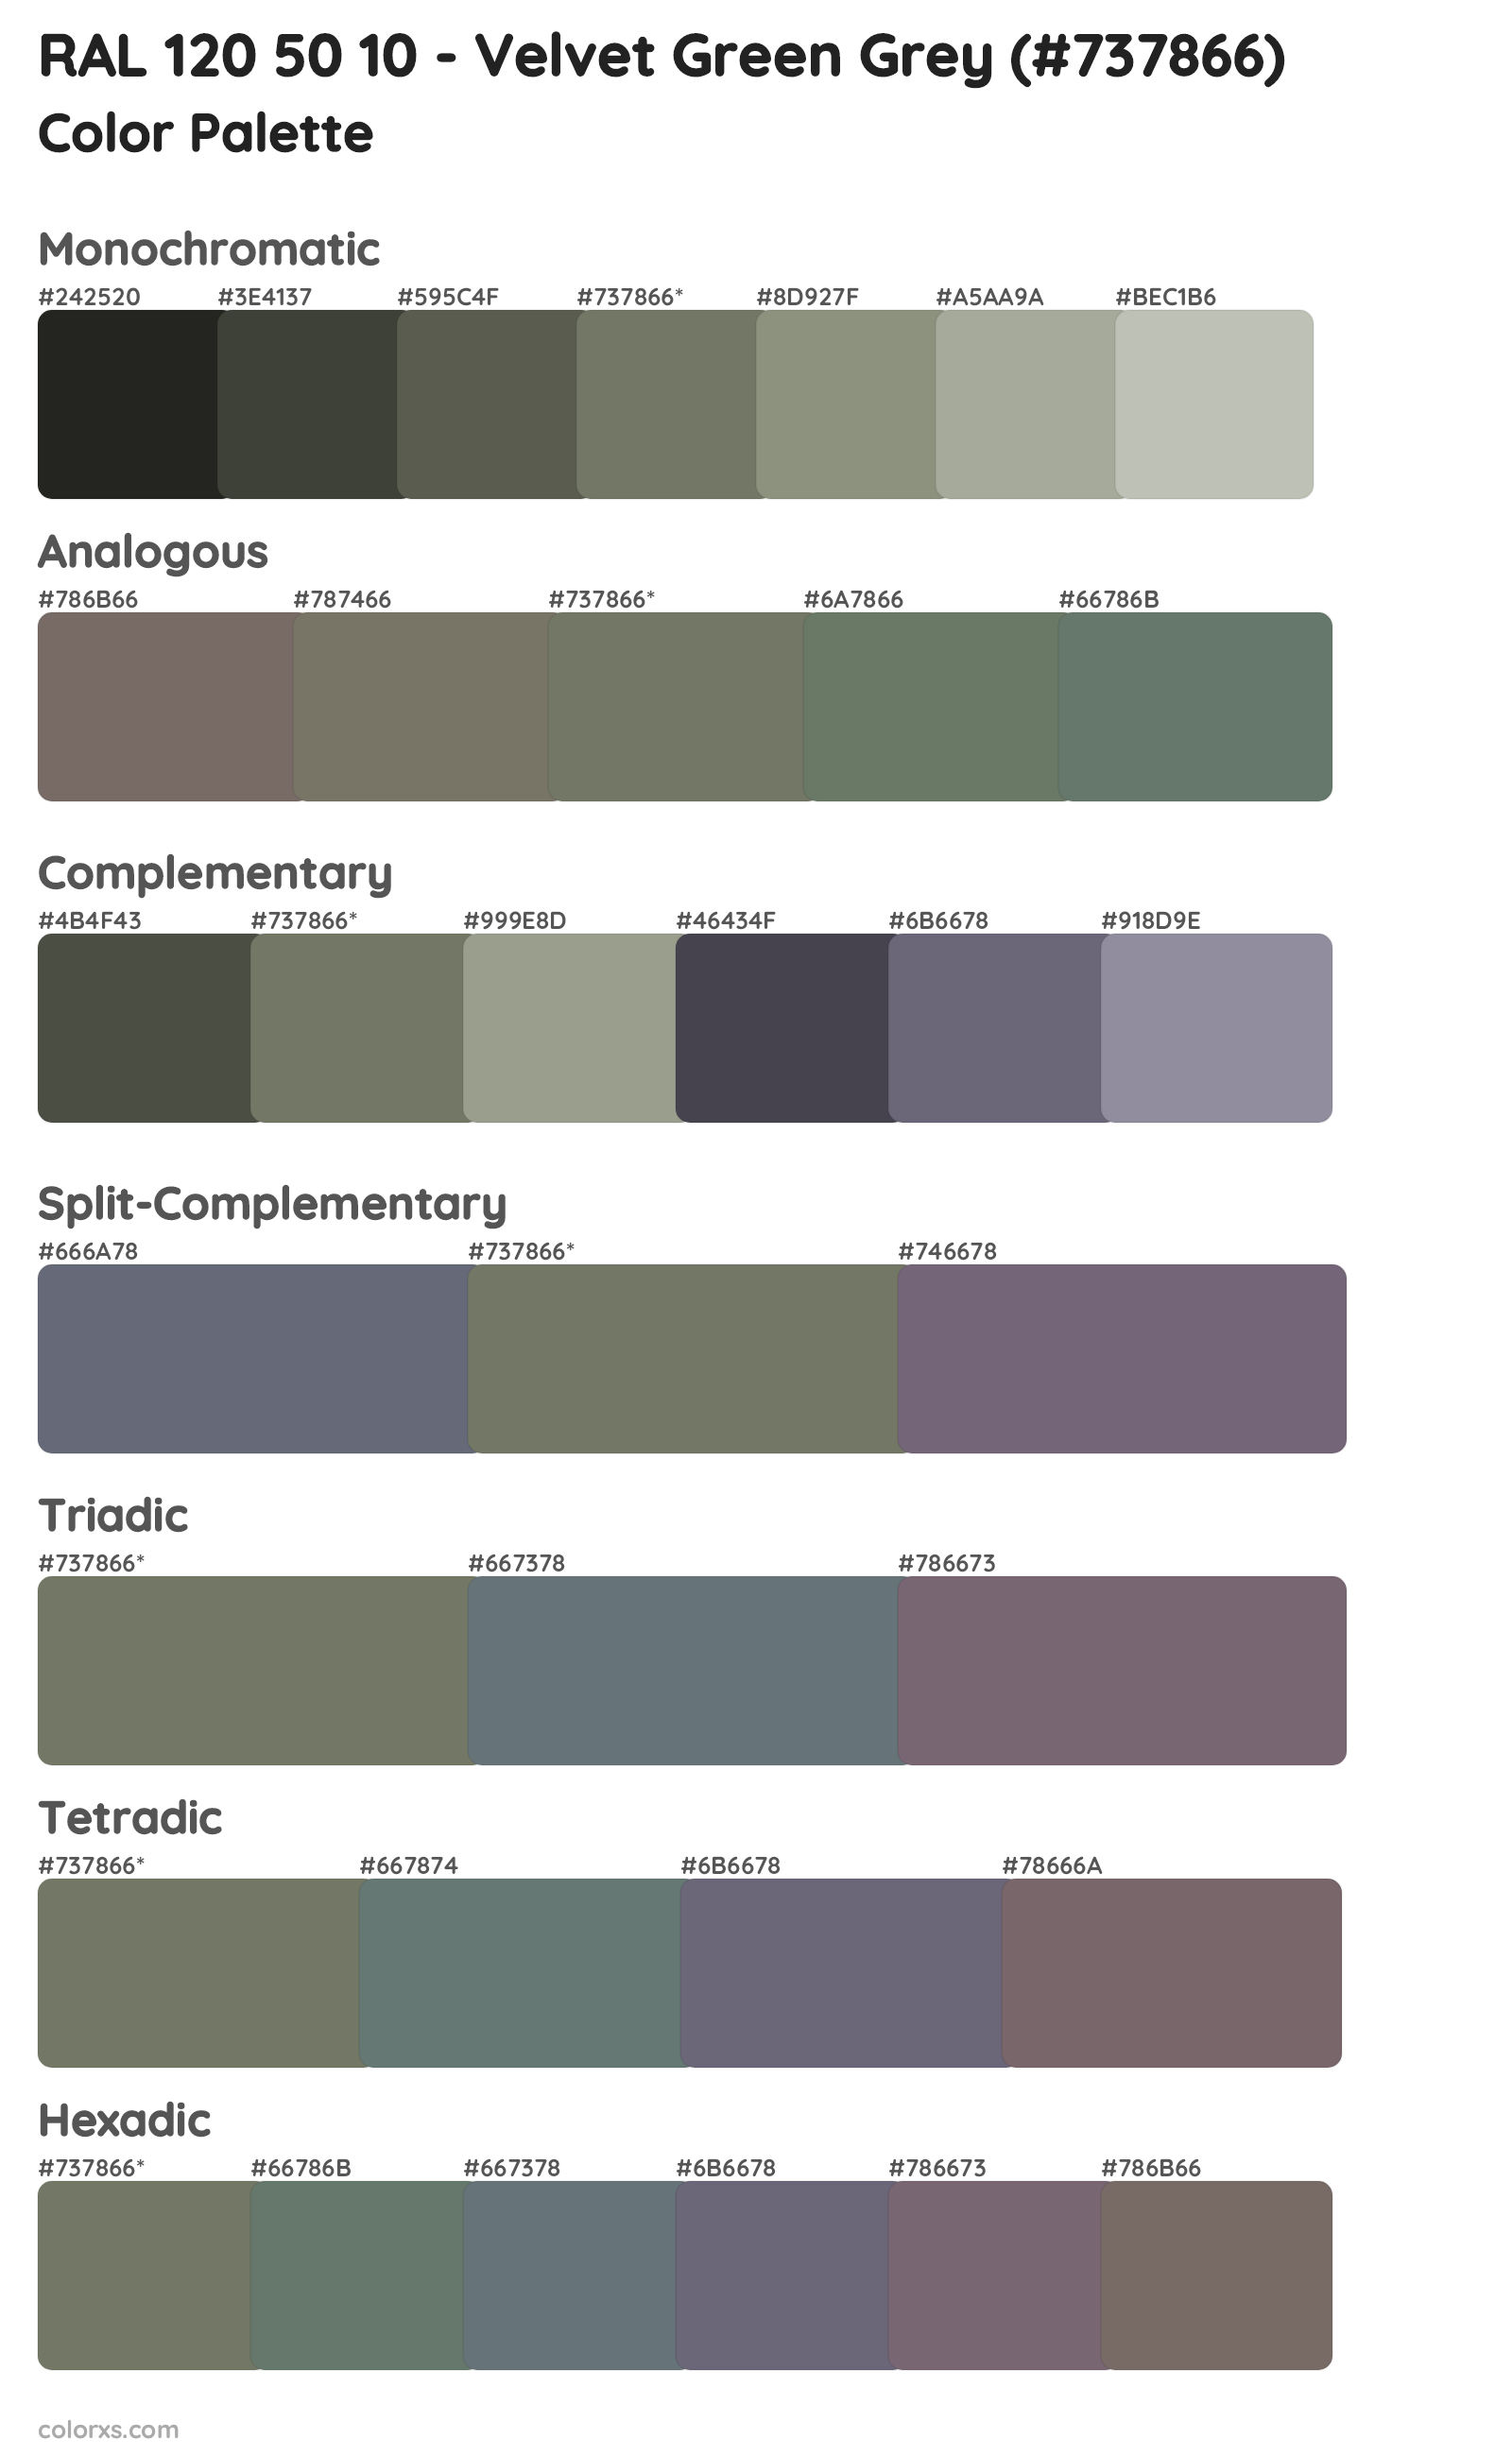 RAL 120 50 10 - Velvet Green Grey Color Scheme Palettes